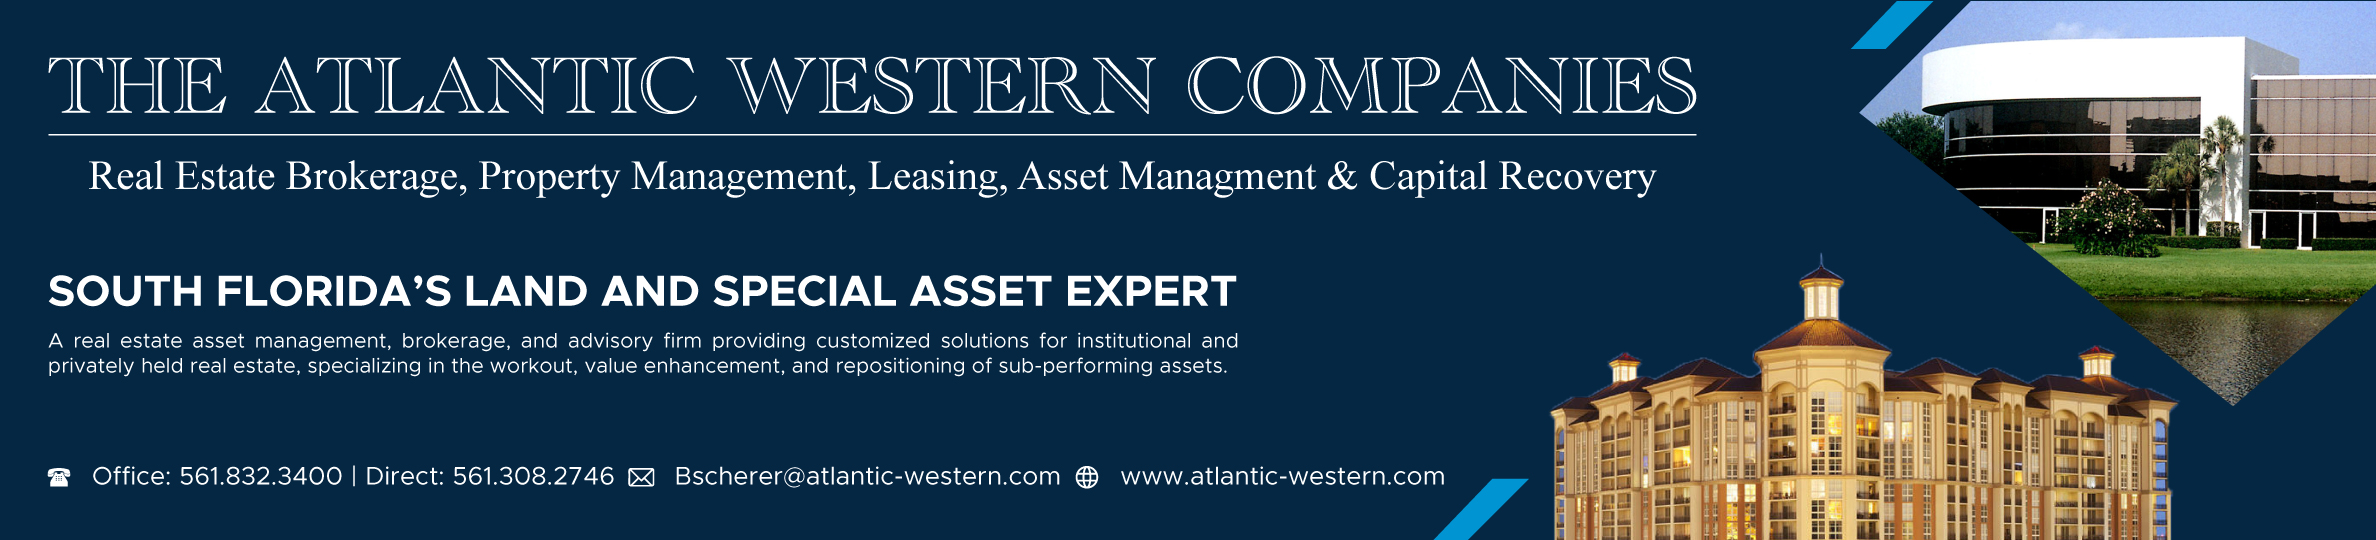 Atlantic Western Companies